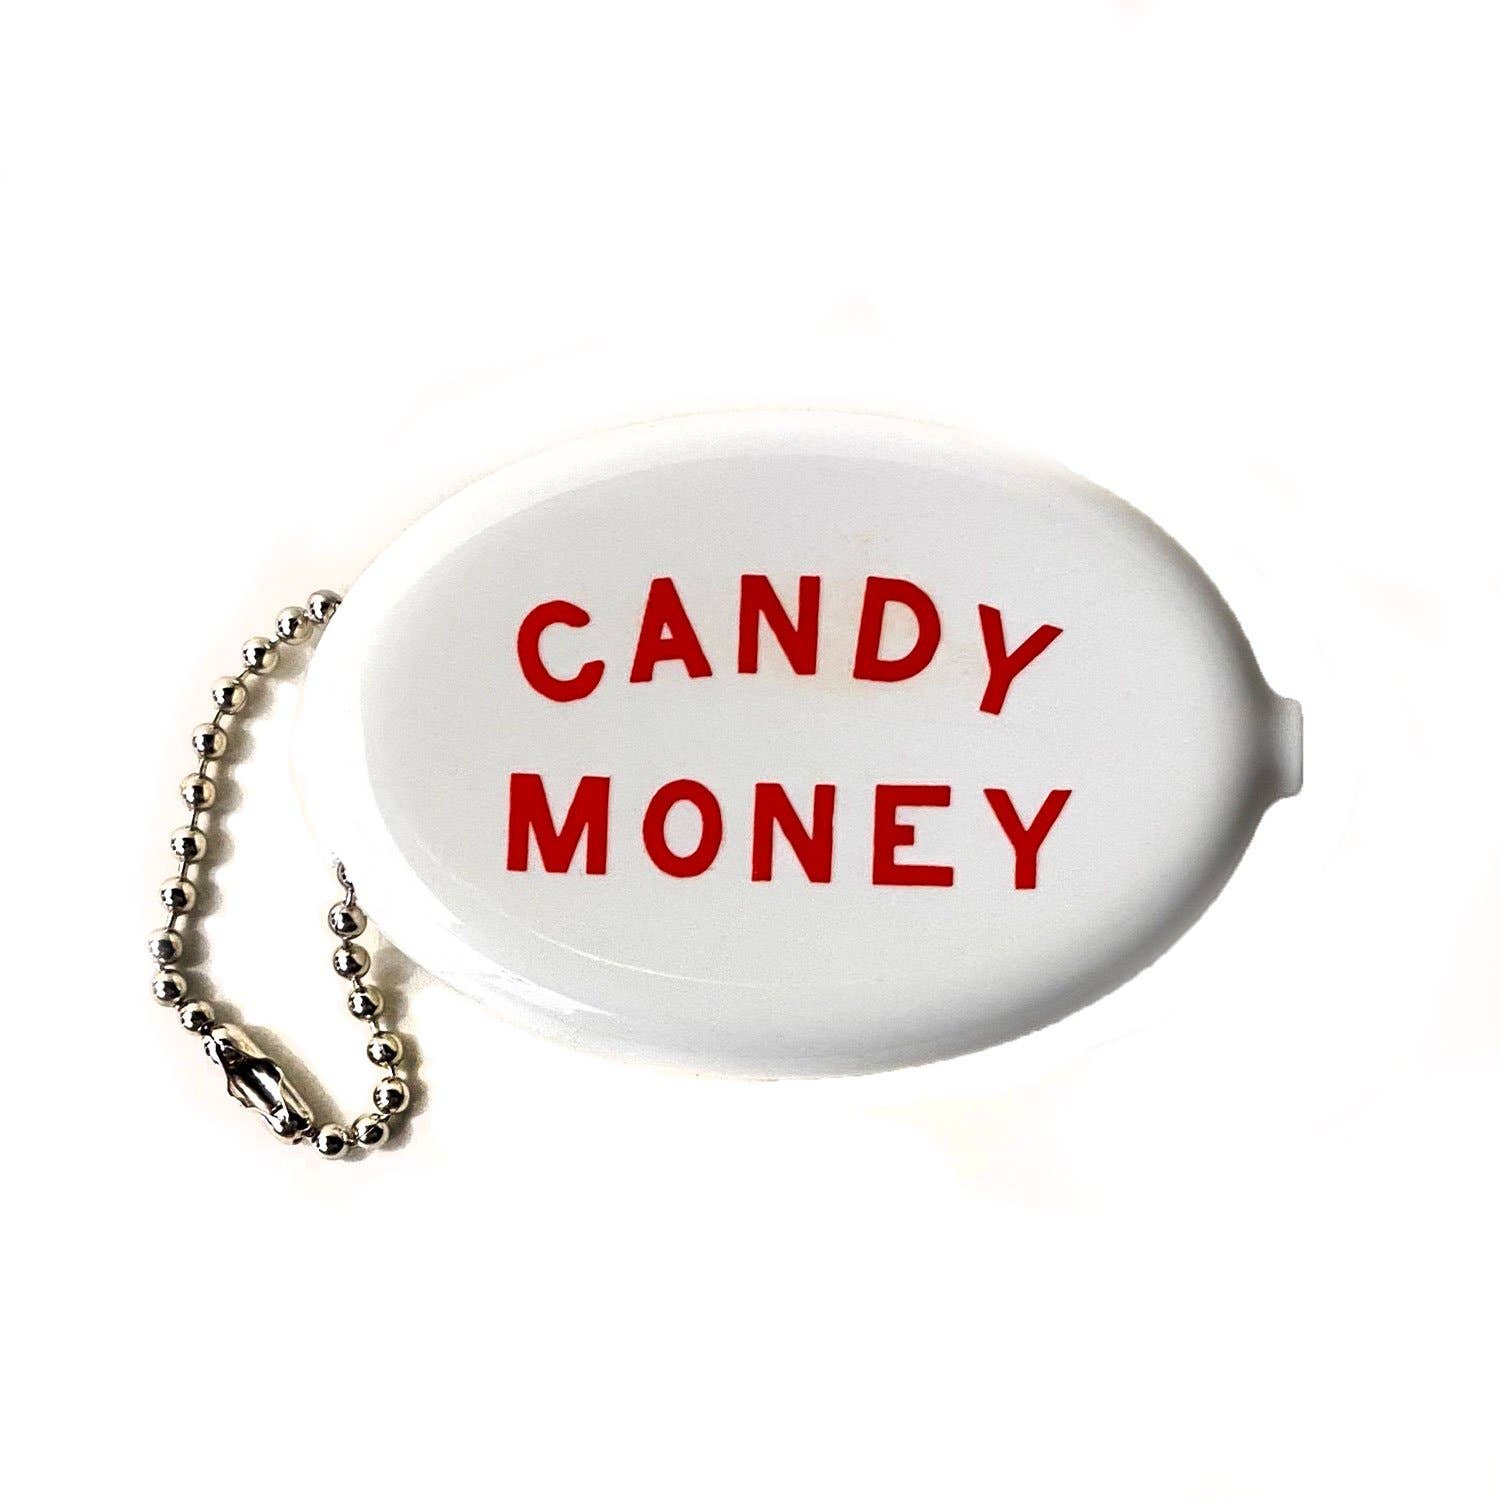 Candy Money